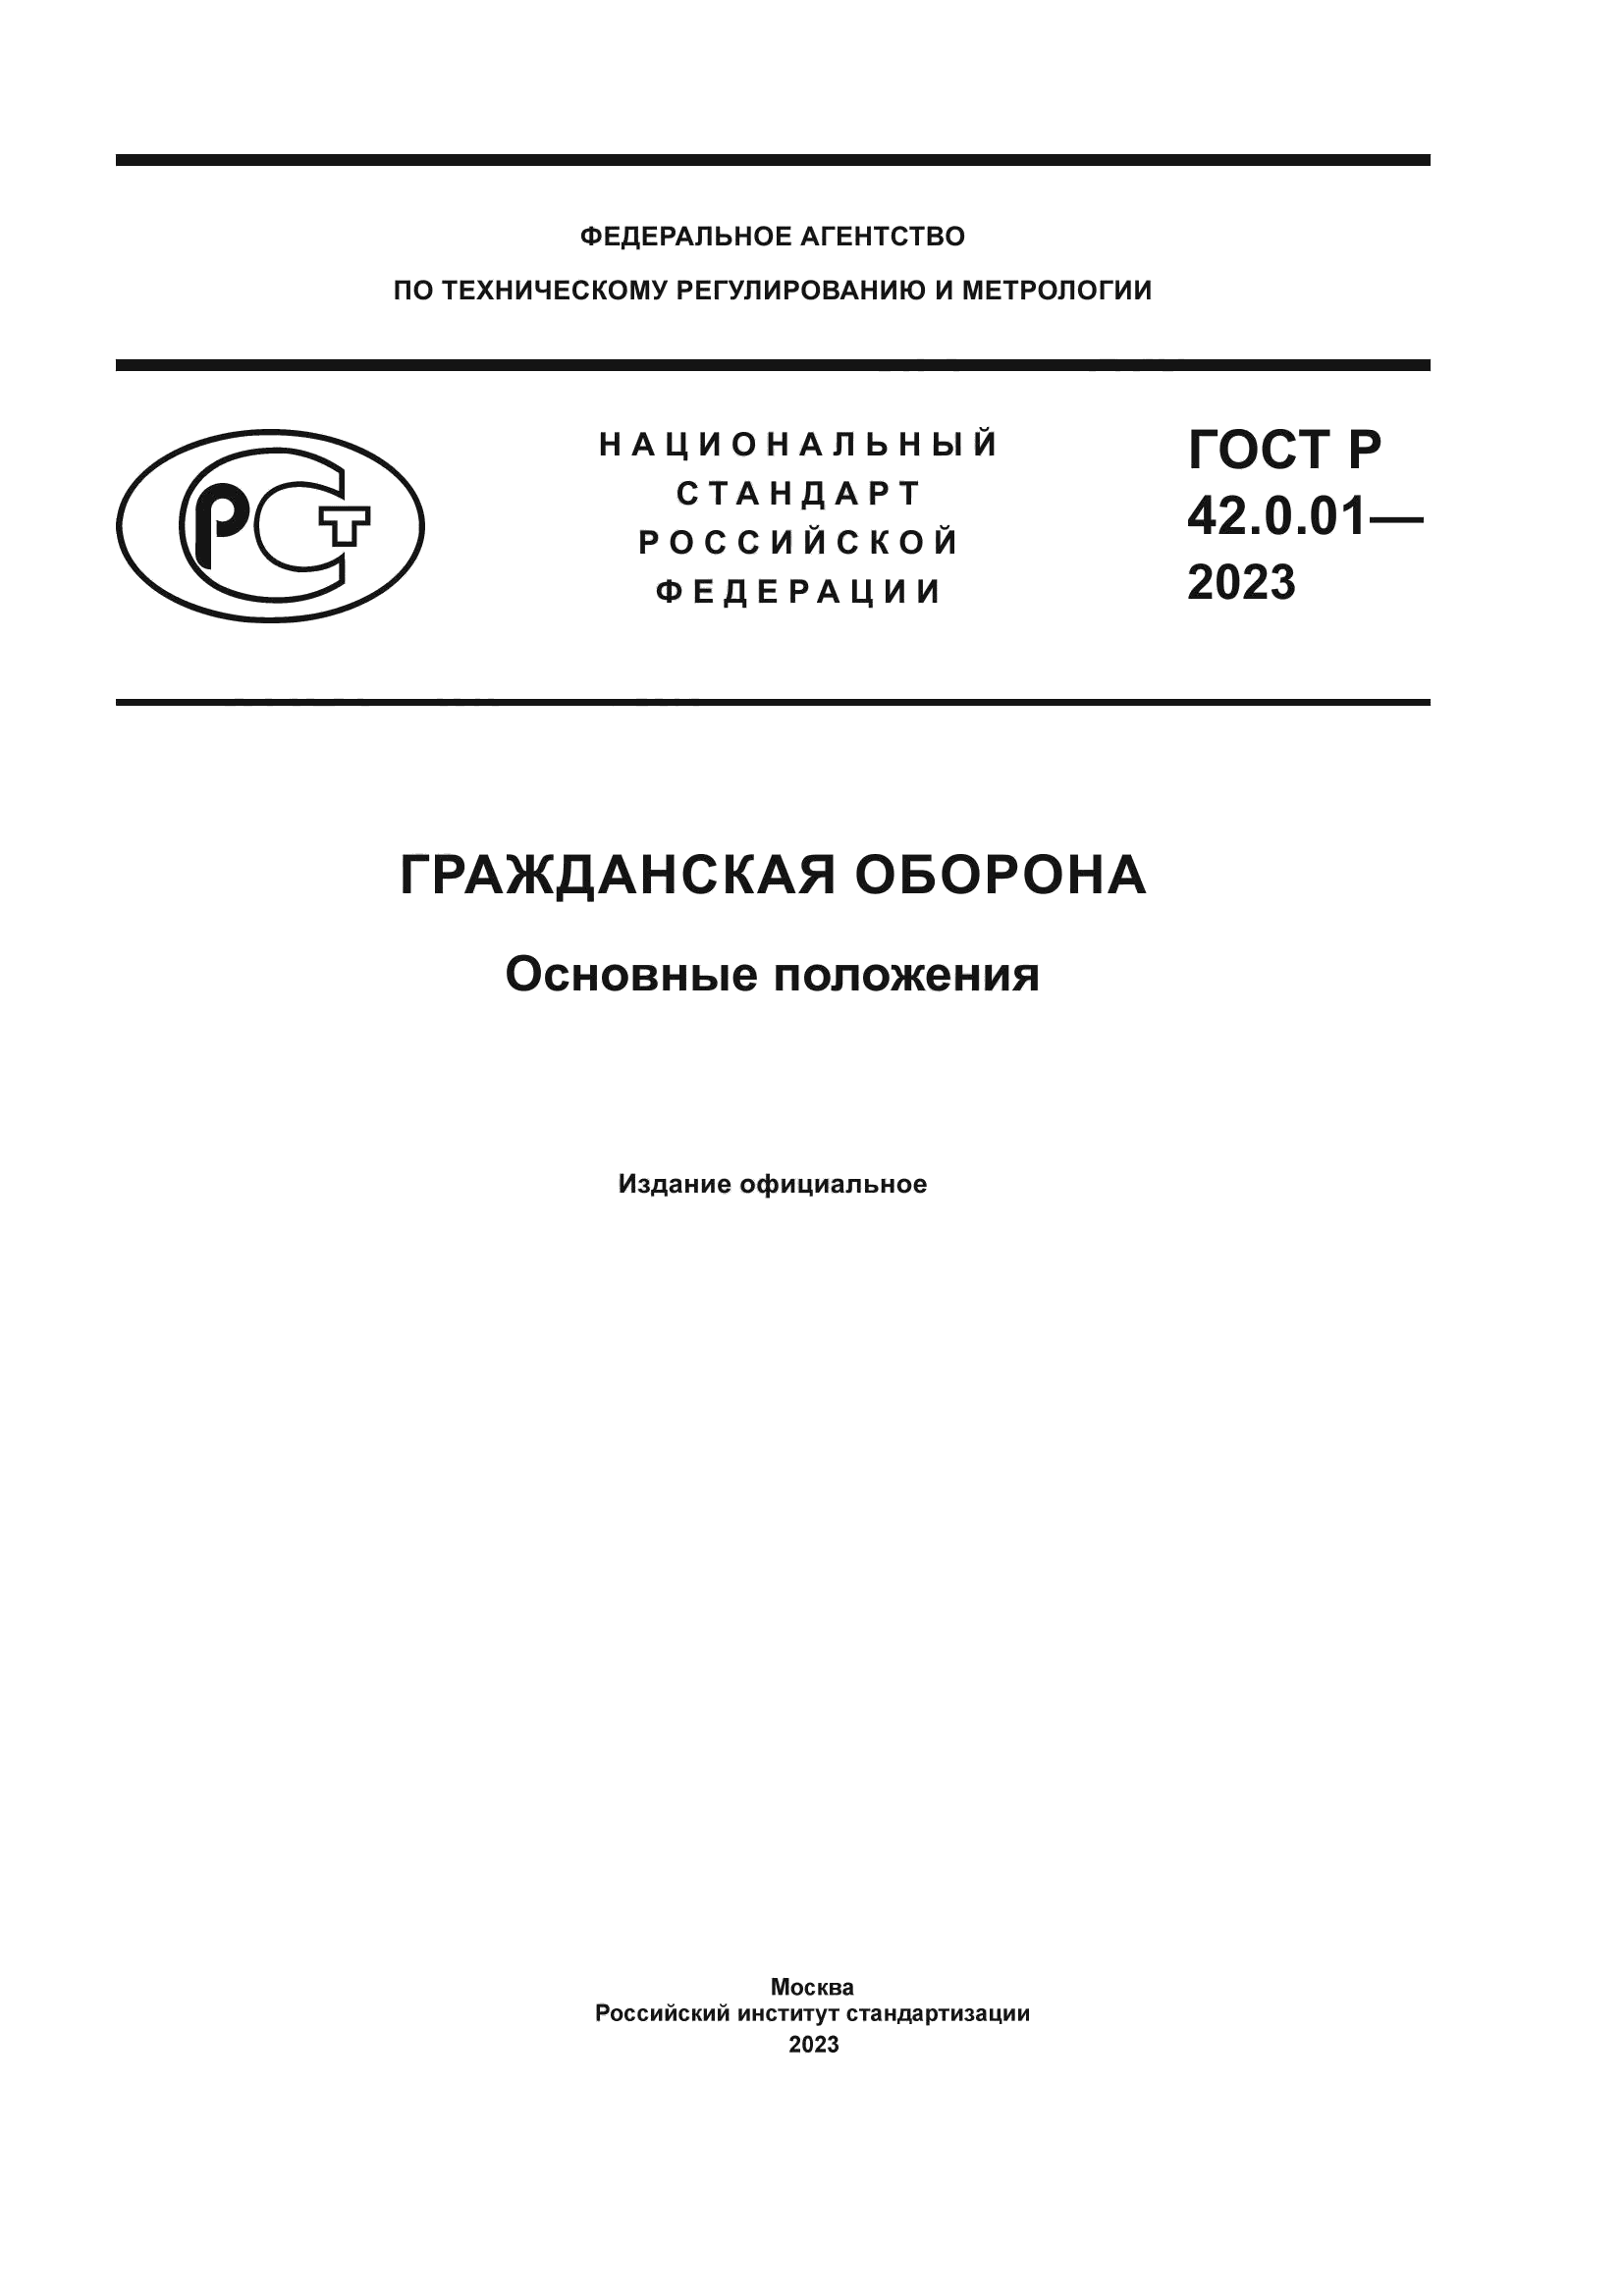 ГОСТ Р 42.0.01-2023